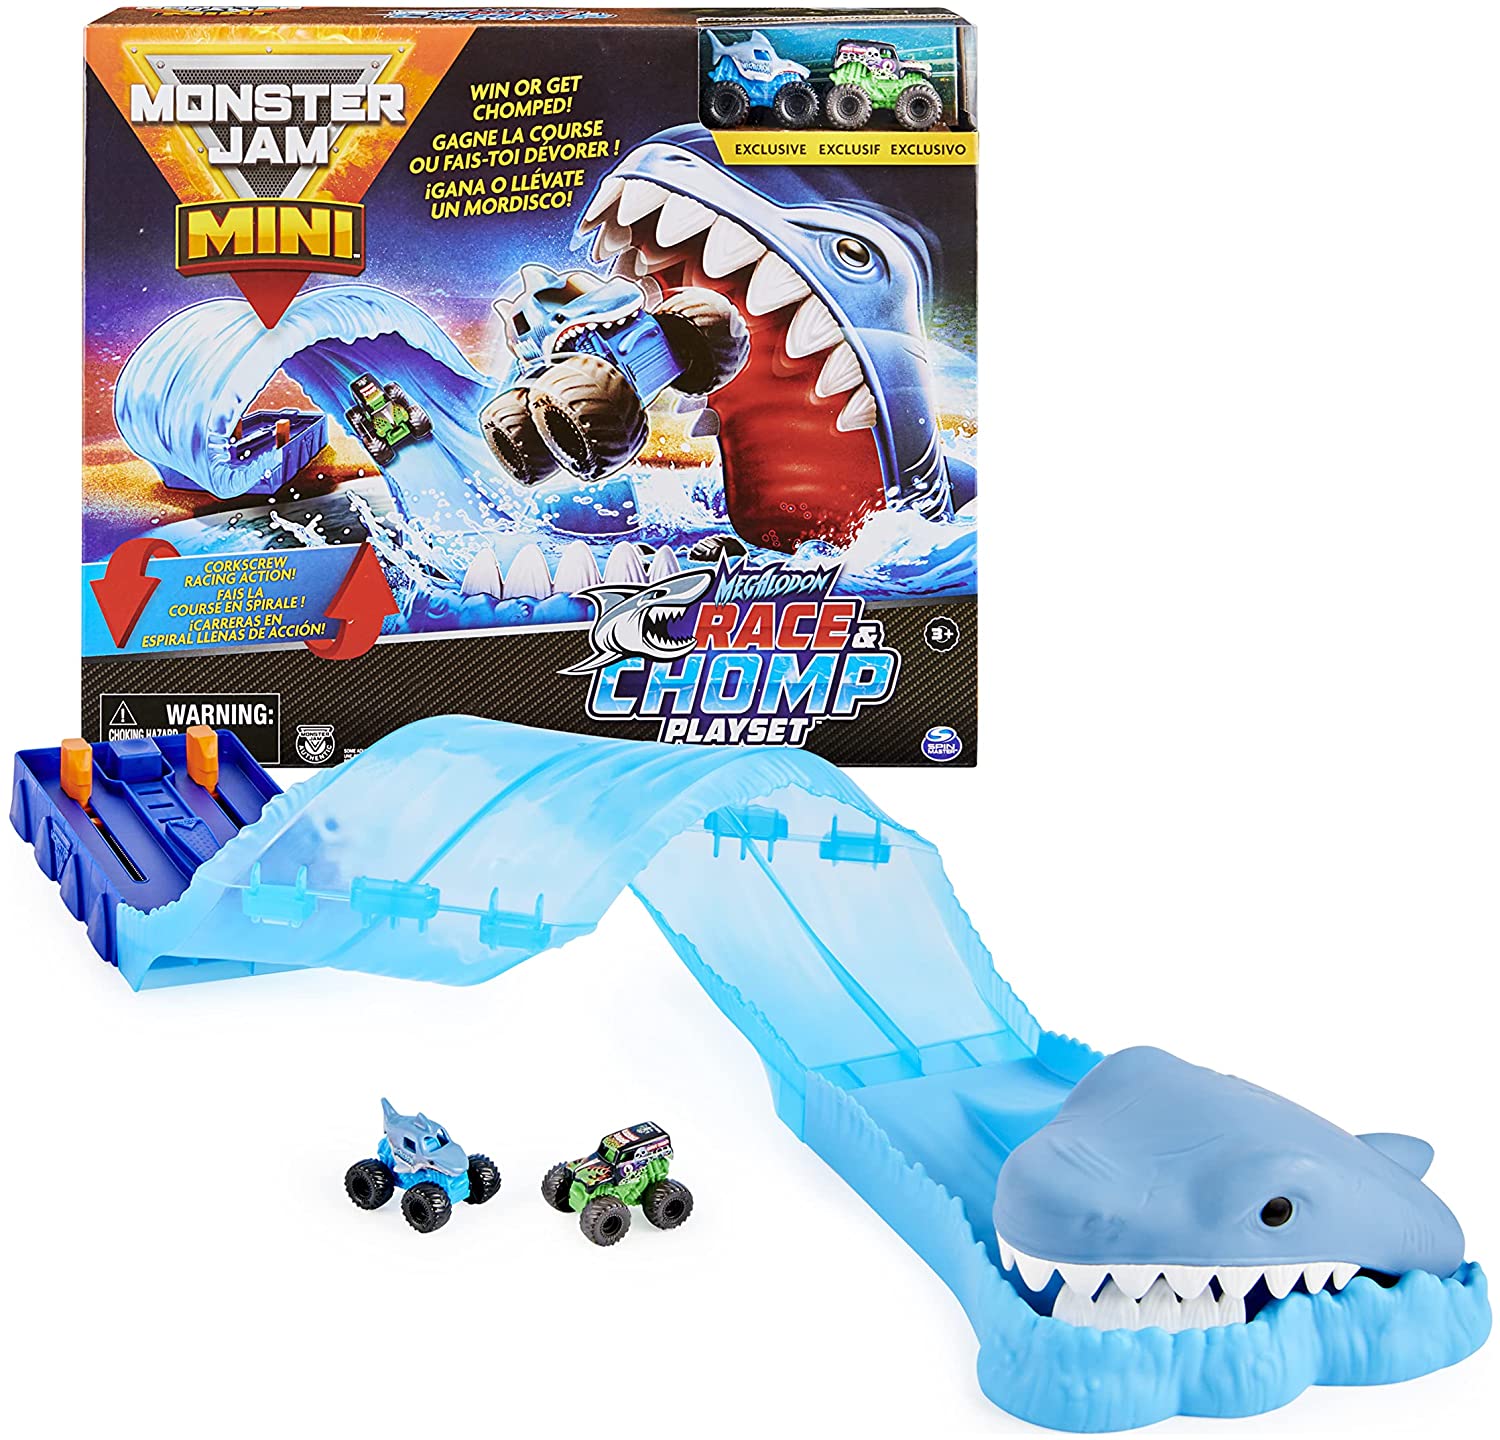 Monster Jam Mini Megalodon Race & Chomp Kids' Playset w/ 2 Mini Trucks $7 + Free Shipping w/ Prime or on orders over $25